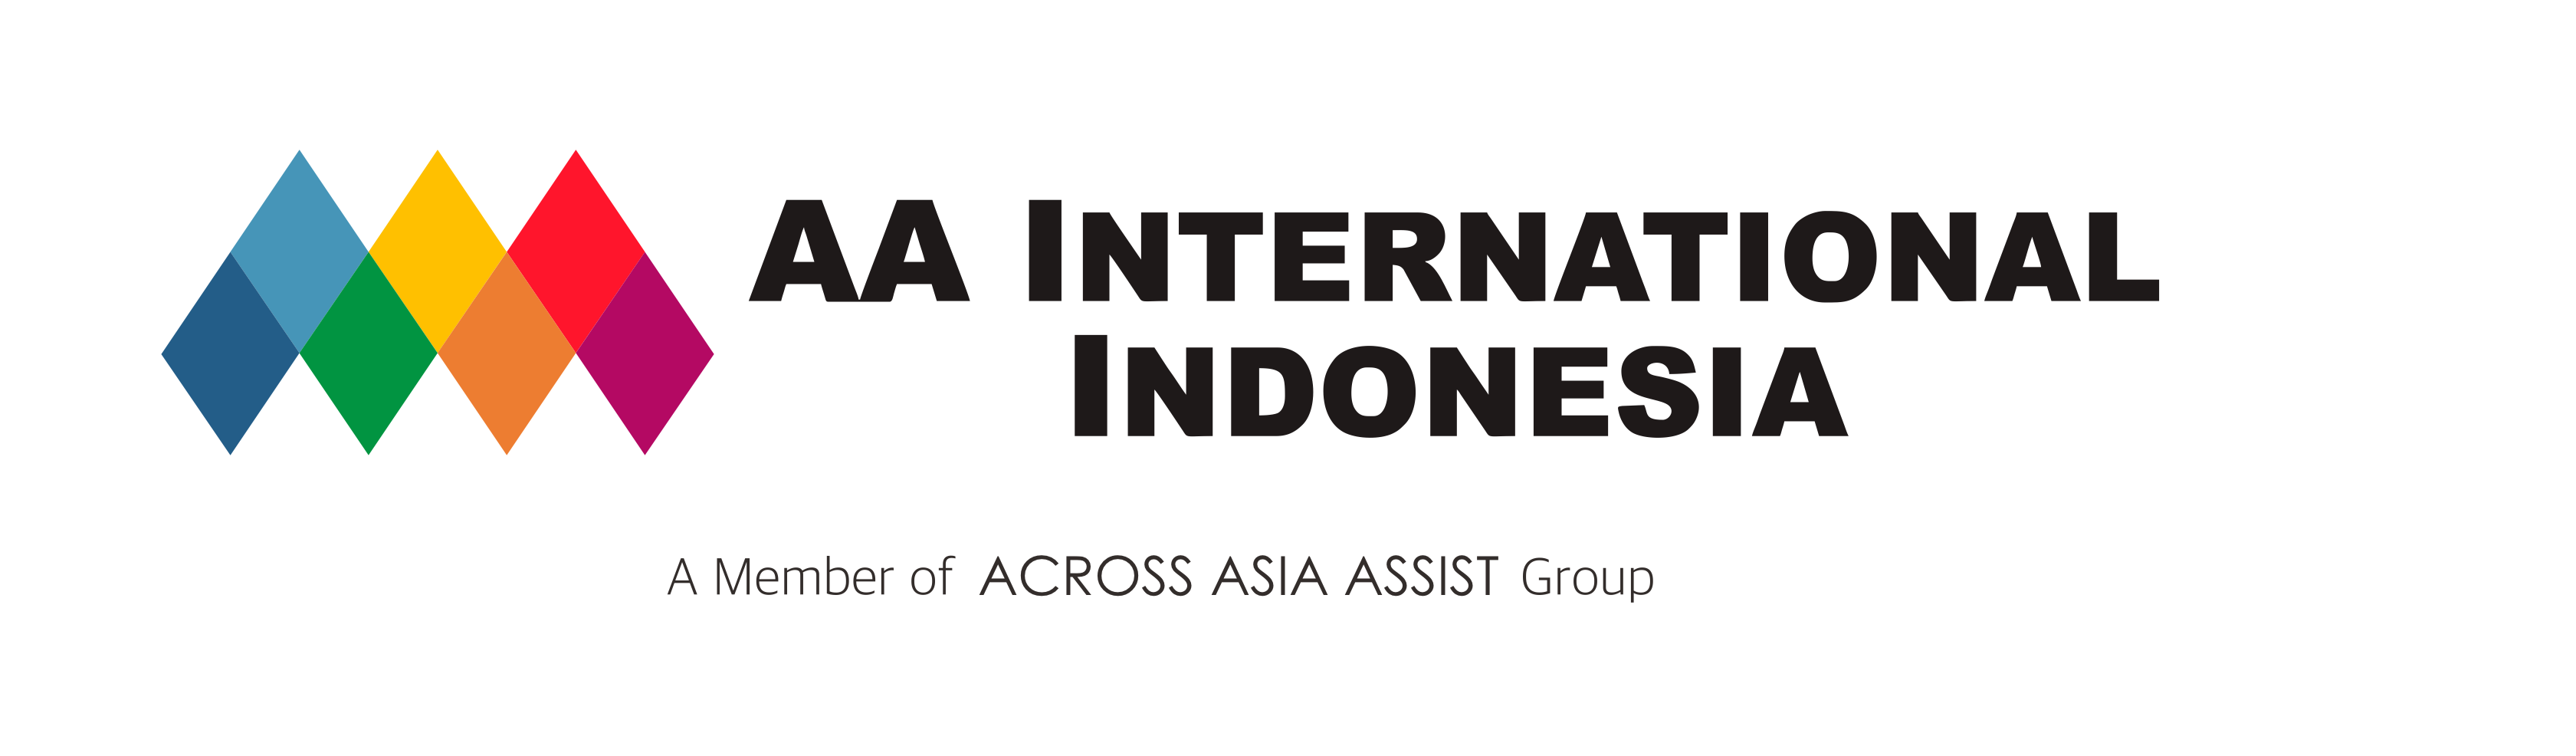 ASURANSI REKANAN PT. AA International Indonesia (AAI Indonesia) 